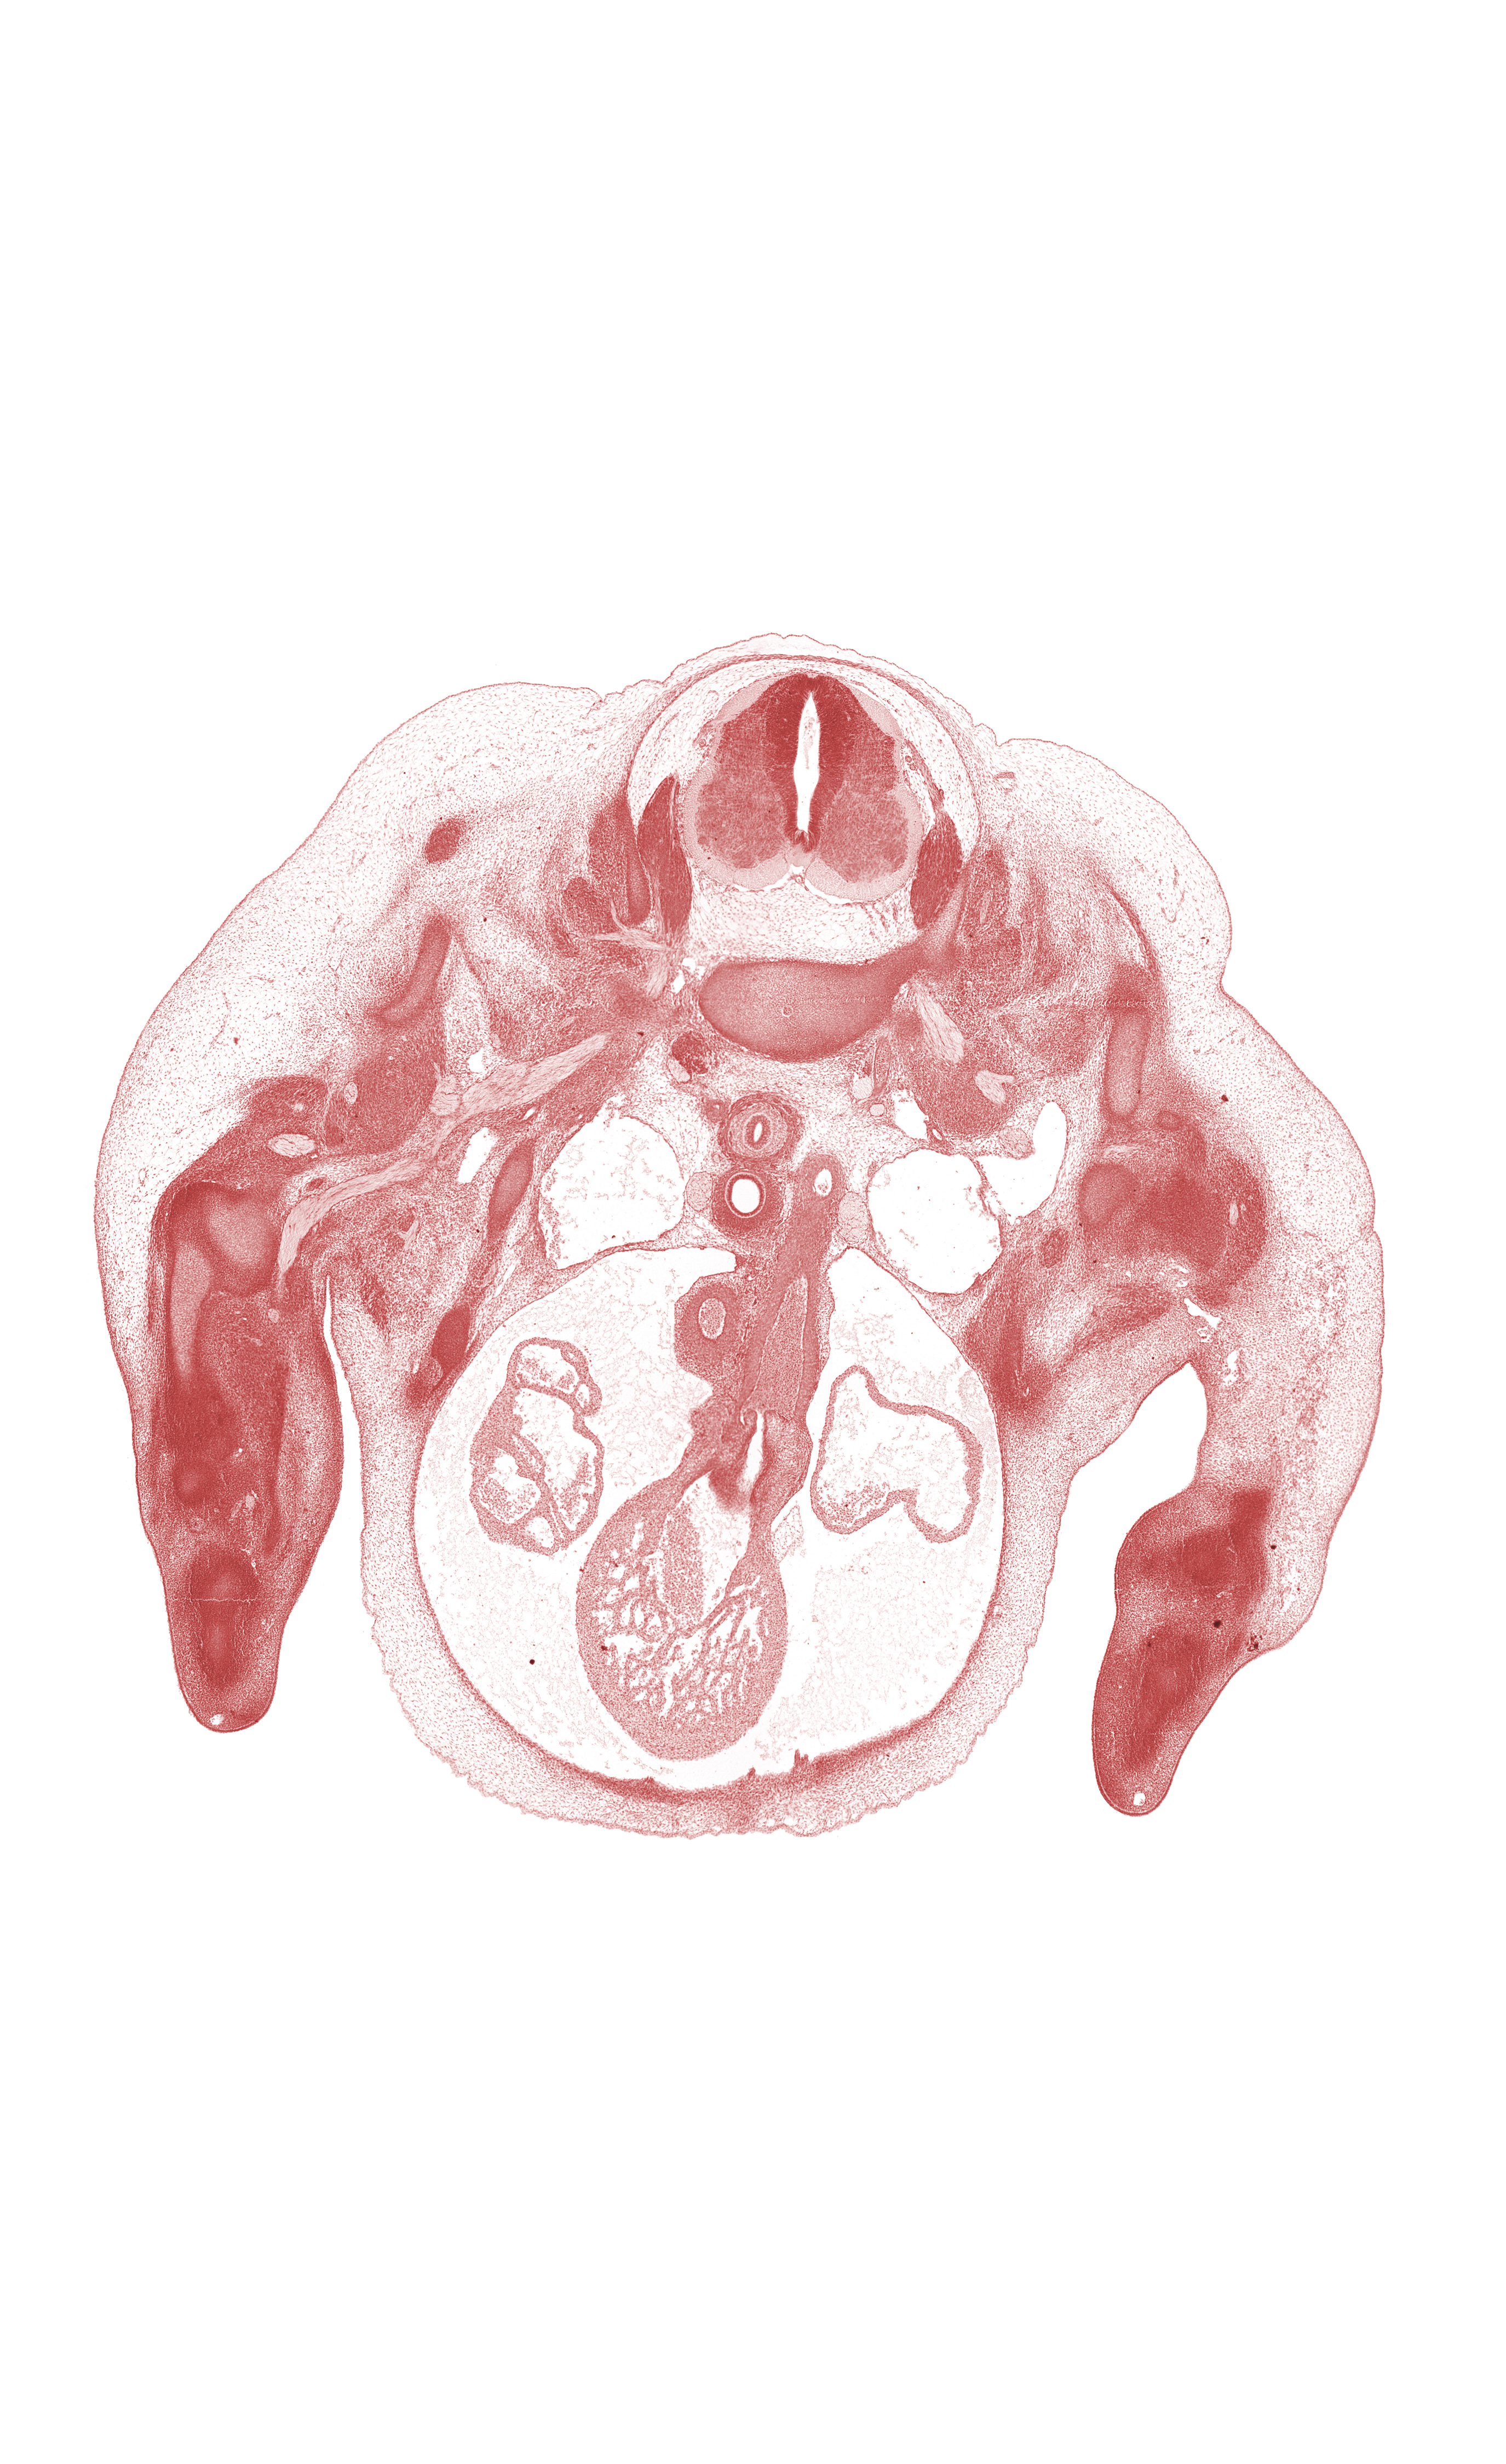 C-7 spinal ganglion, C-7 ventral primary ramus, aorta, ascending aorta, axillary artery, brachial plexus, carpus, central canal, dorsal fasciculus, hand ray, inferior cervical sympathetic ganglion, infundibulum of right ventricle, left atrium, left vagus nerve (CN X), pectoralis major muscle, precardinal vein, pulmonary semilunar valve, pulmonary trunk, retro-esophageal space, right atrium, right vagus nerve (CN X), subclavian artery, trabecular part of right ventricle, ventral horn of grey matter